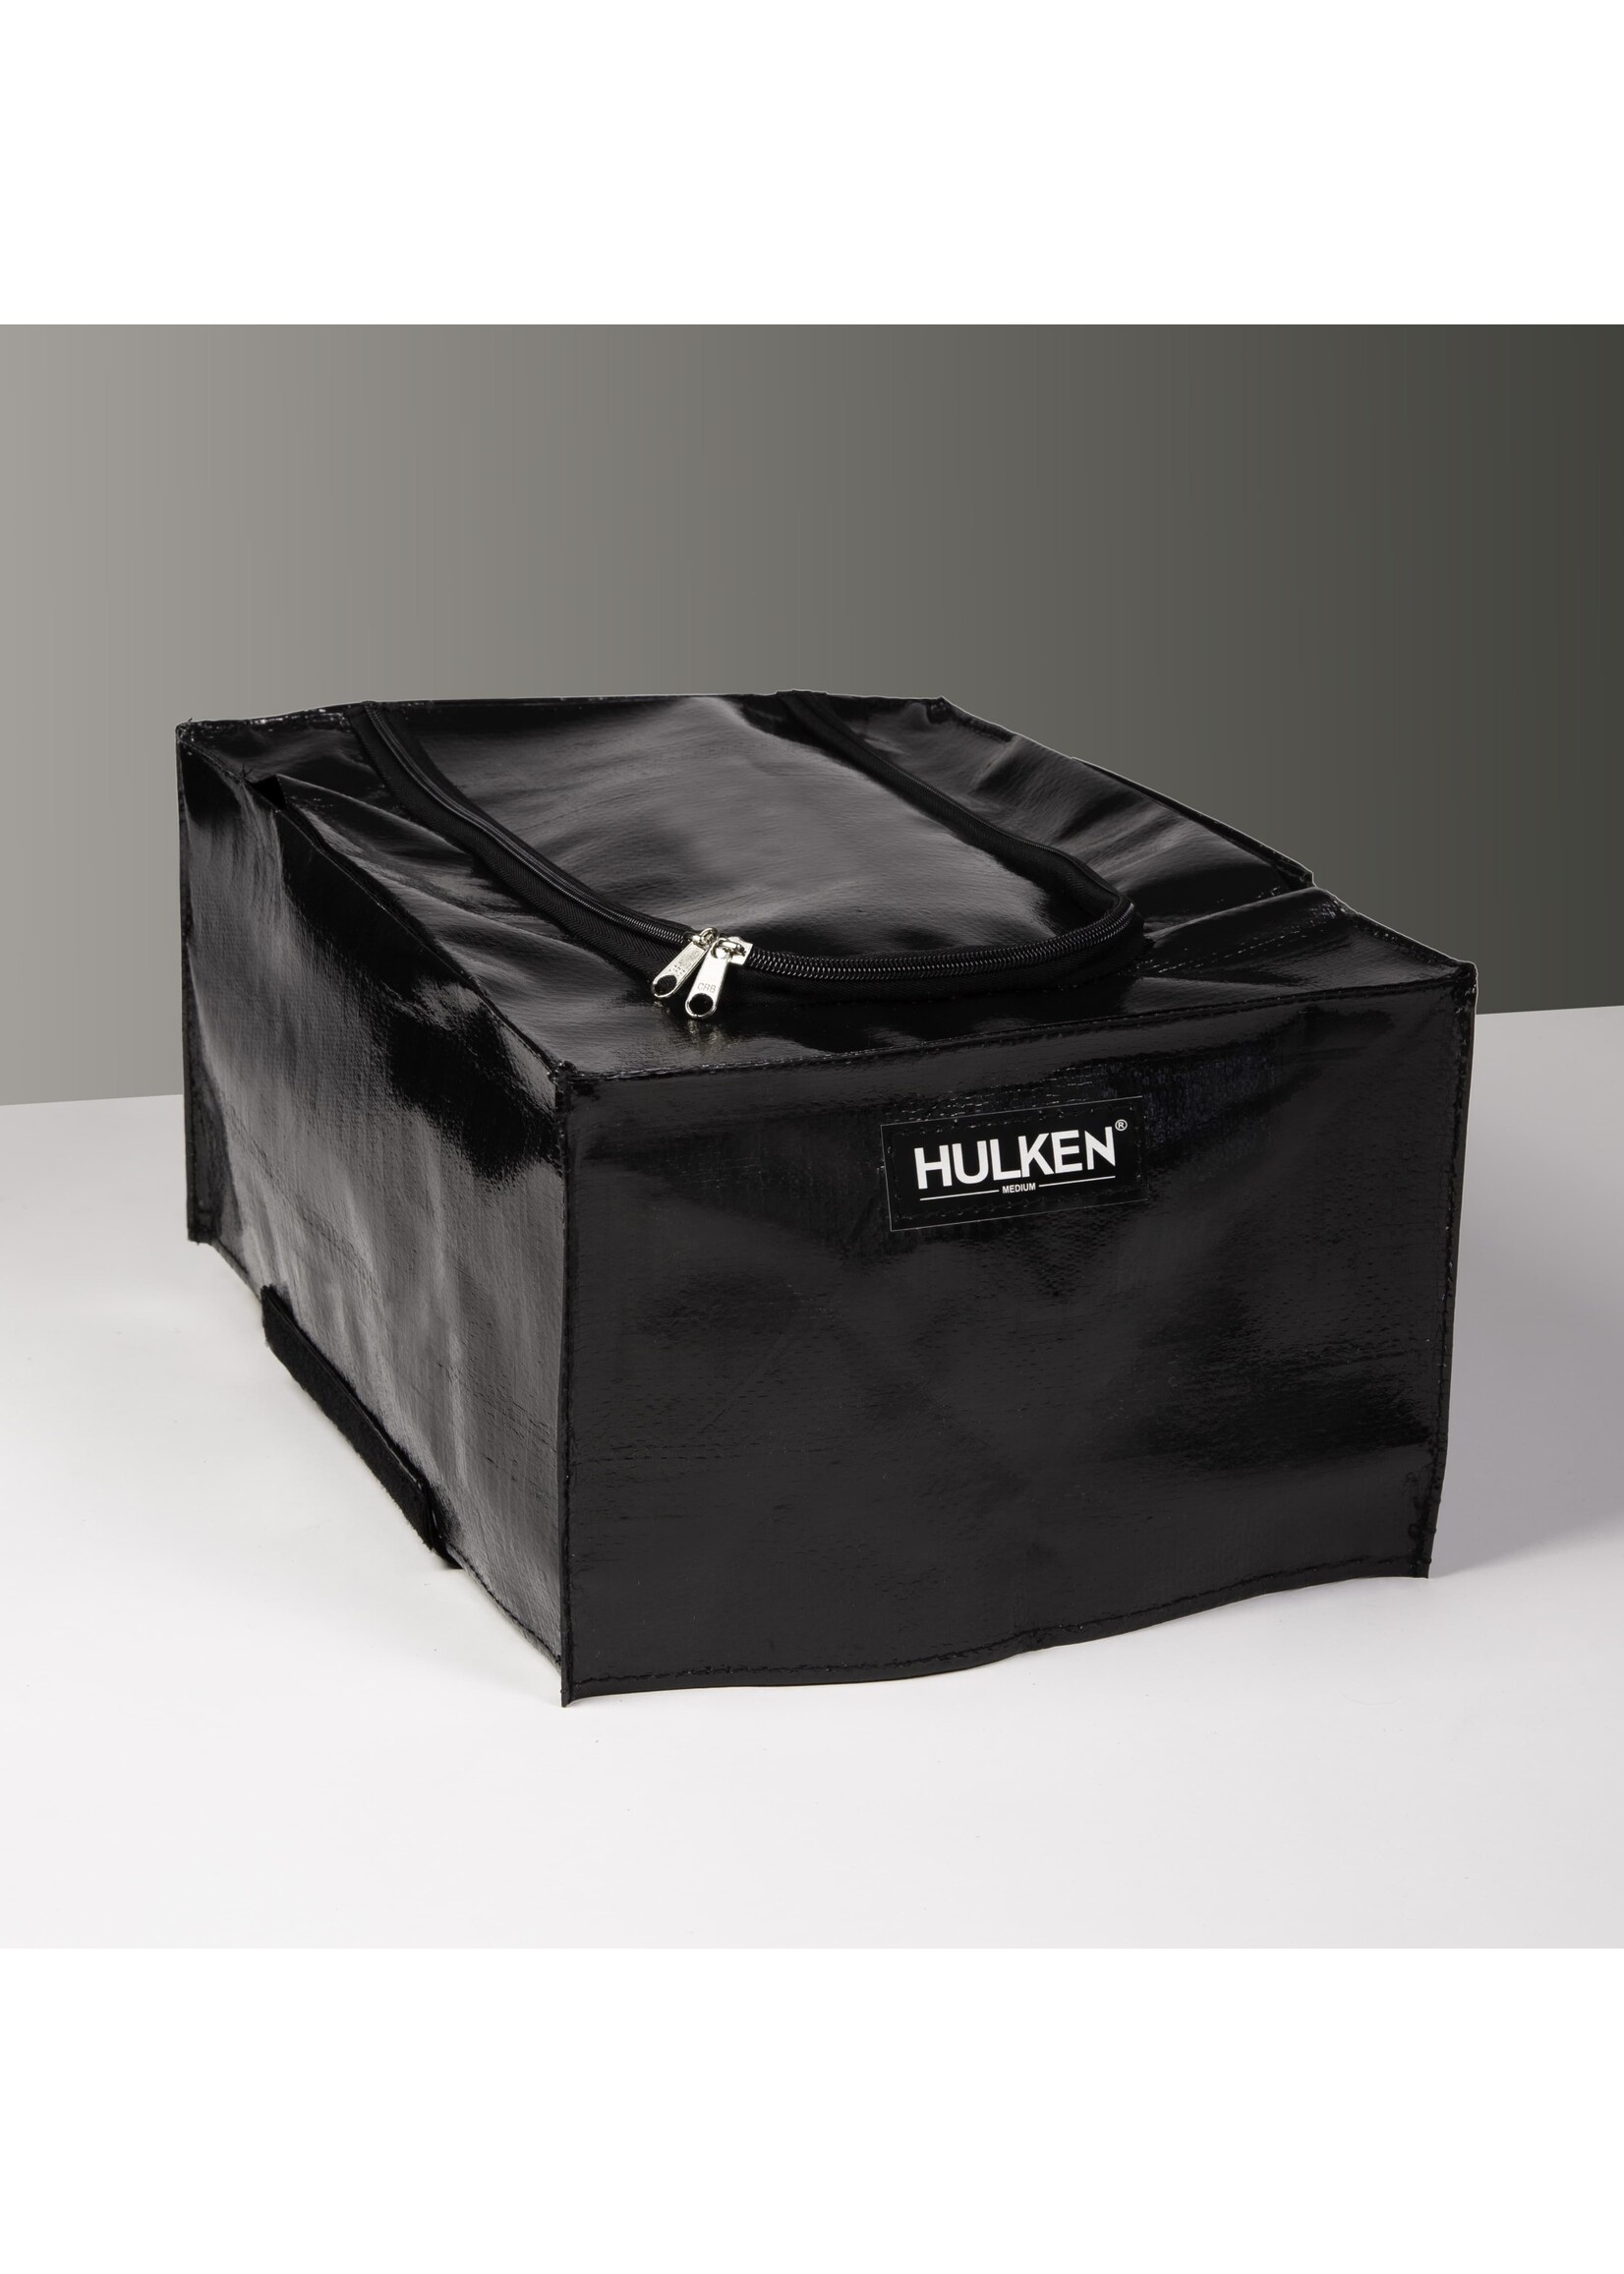 Hulkenbag HULKEN Cover Large Shiny Black (for Hulkenbag L 40x50x60)